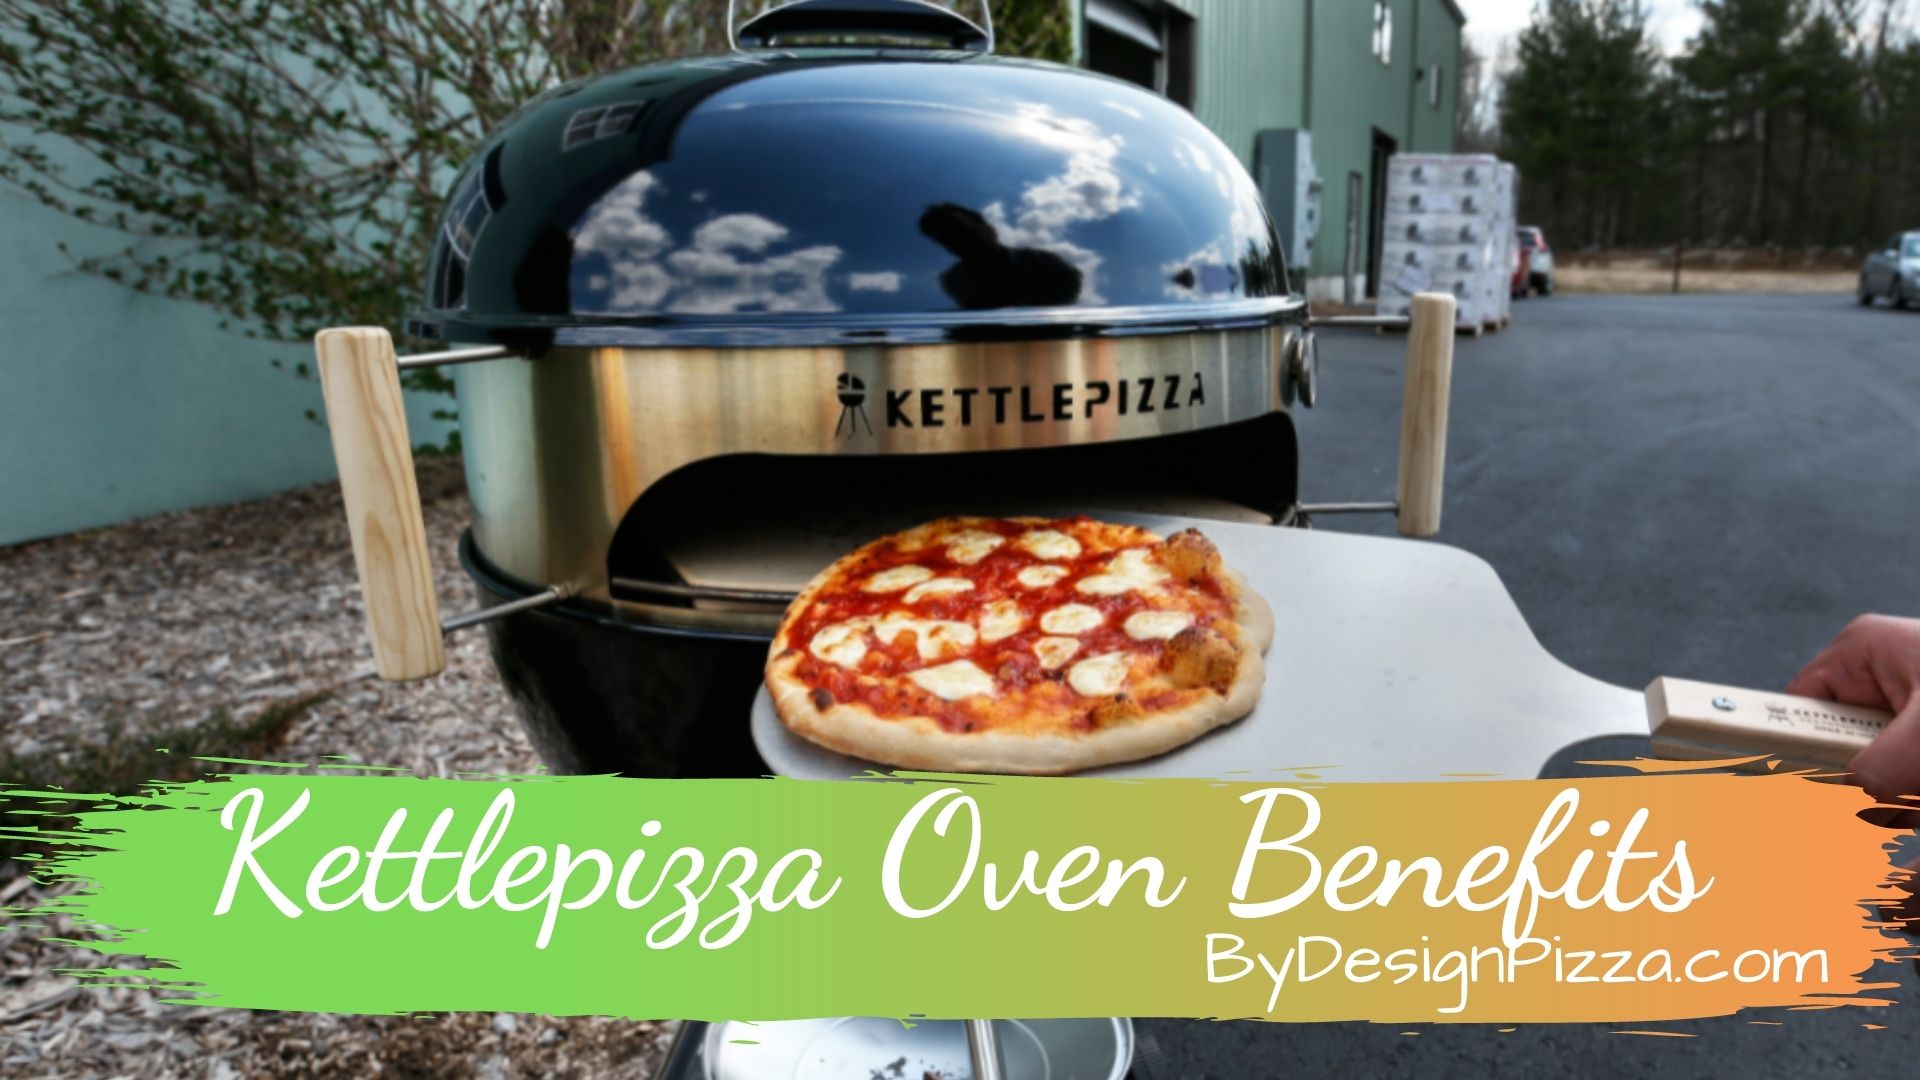 Kettlepizza Oven Benefits